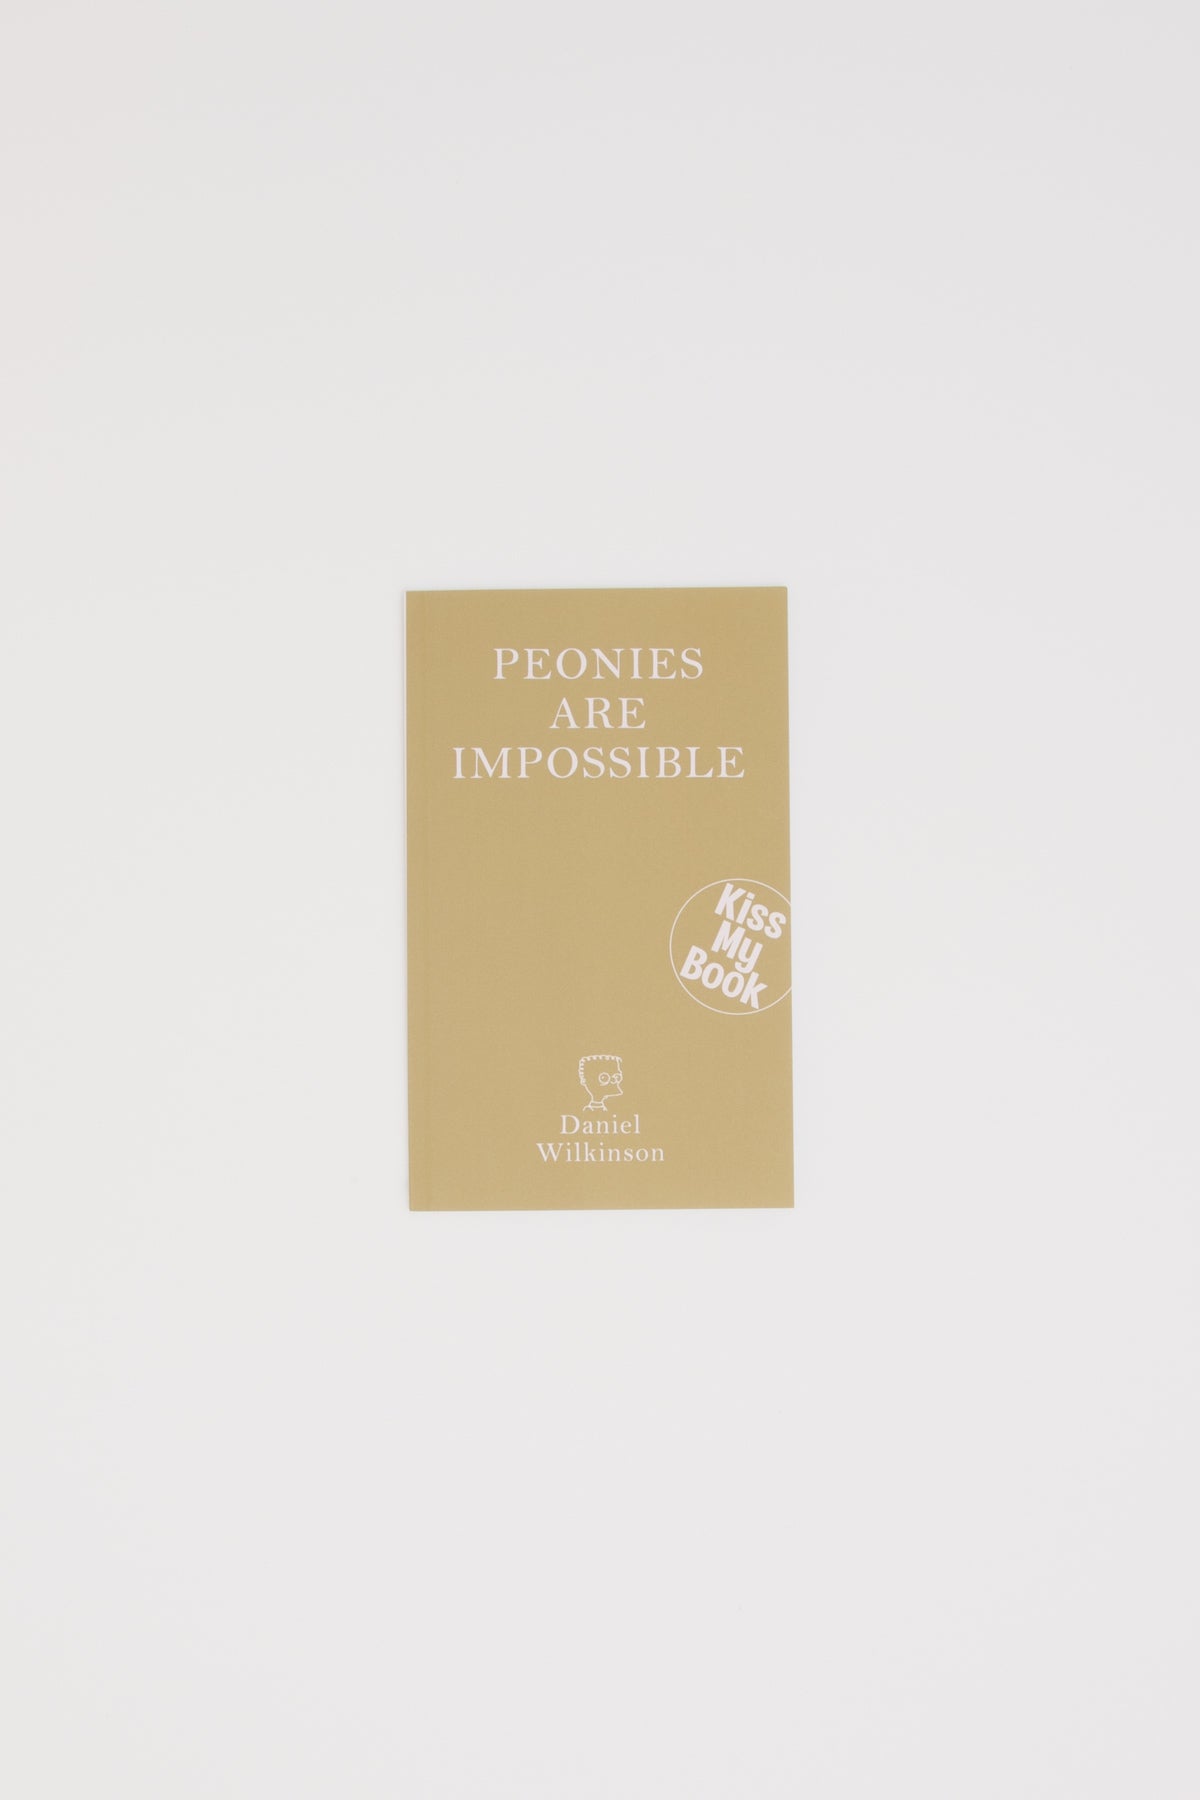 Peonies Are Impossible - Daniel Wilkinson